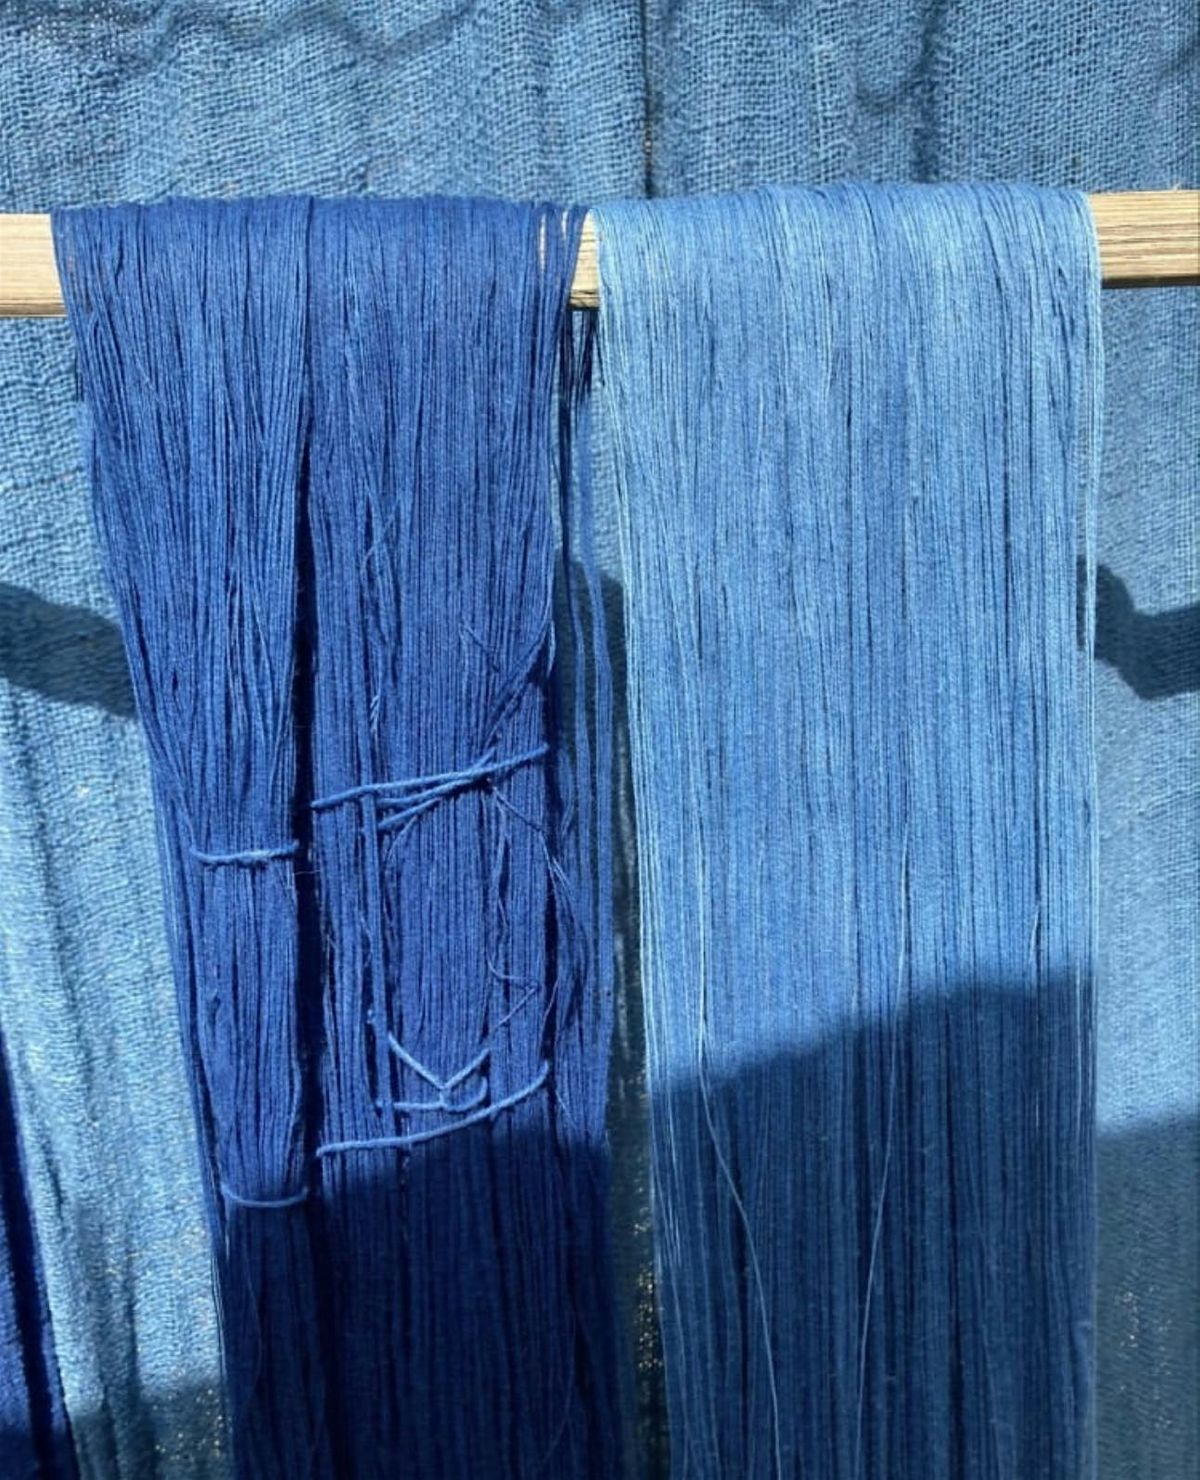 Feeling blue : fibre and dye from The Indigo Plot